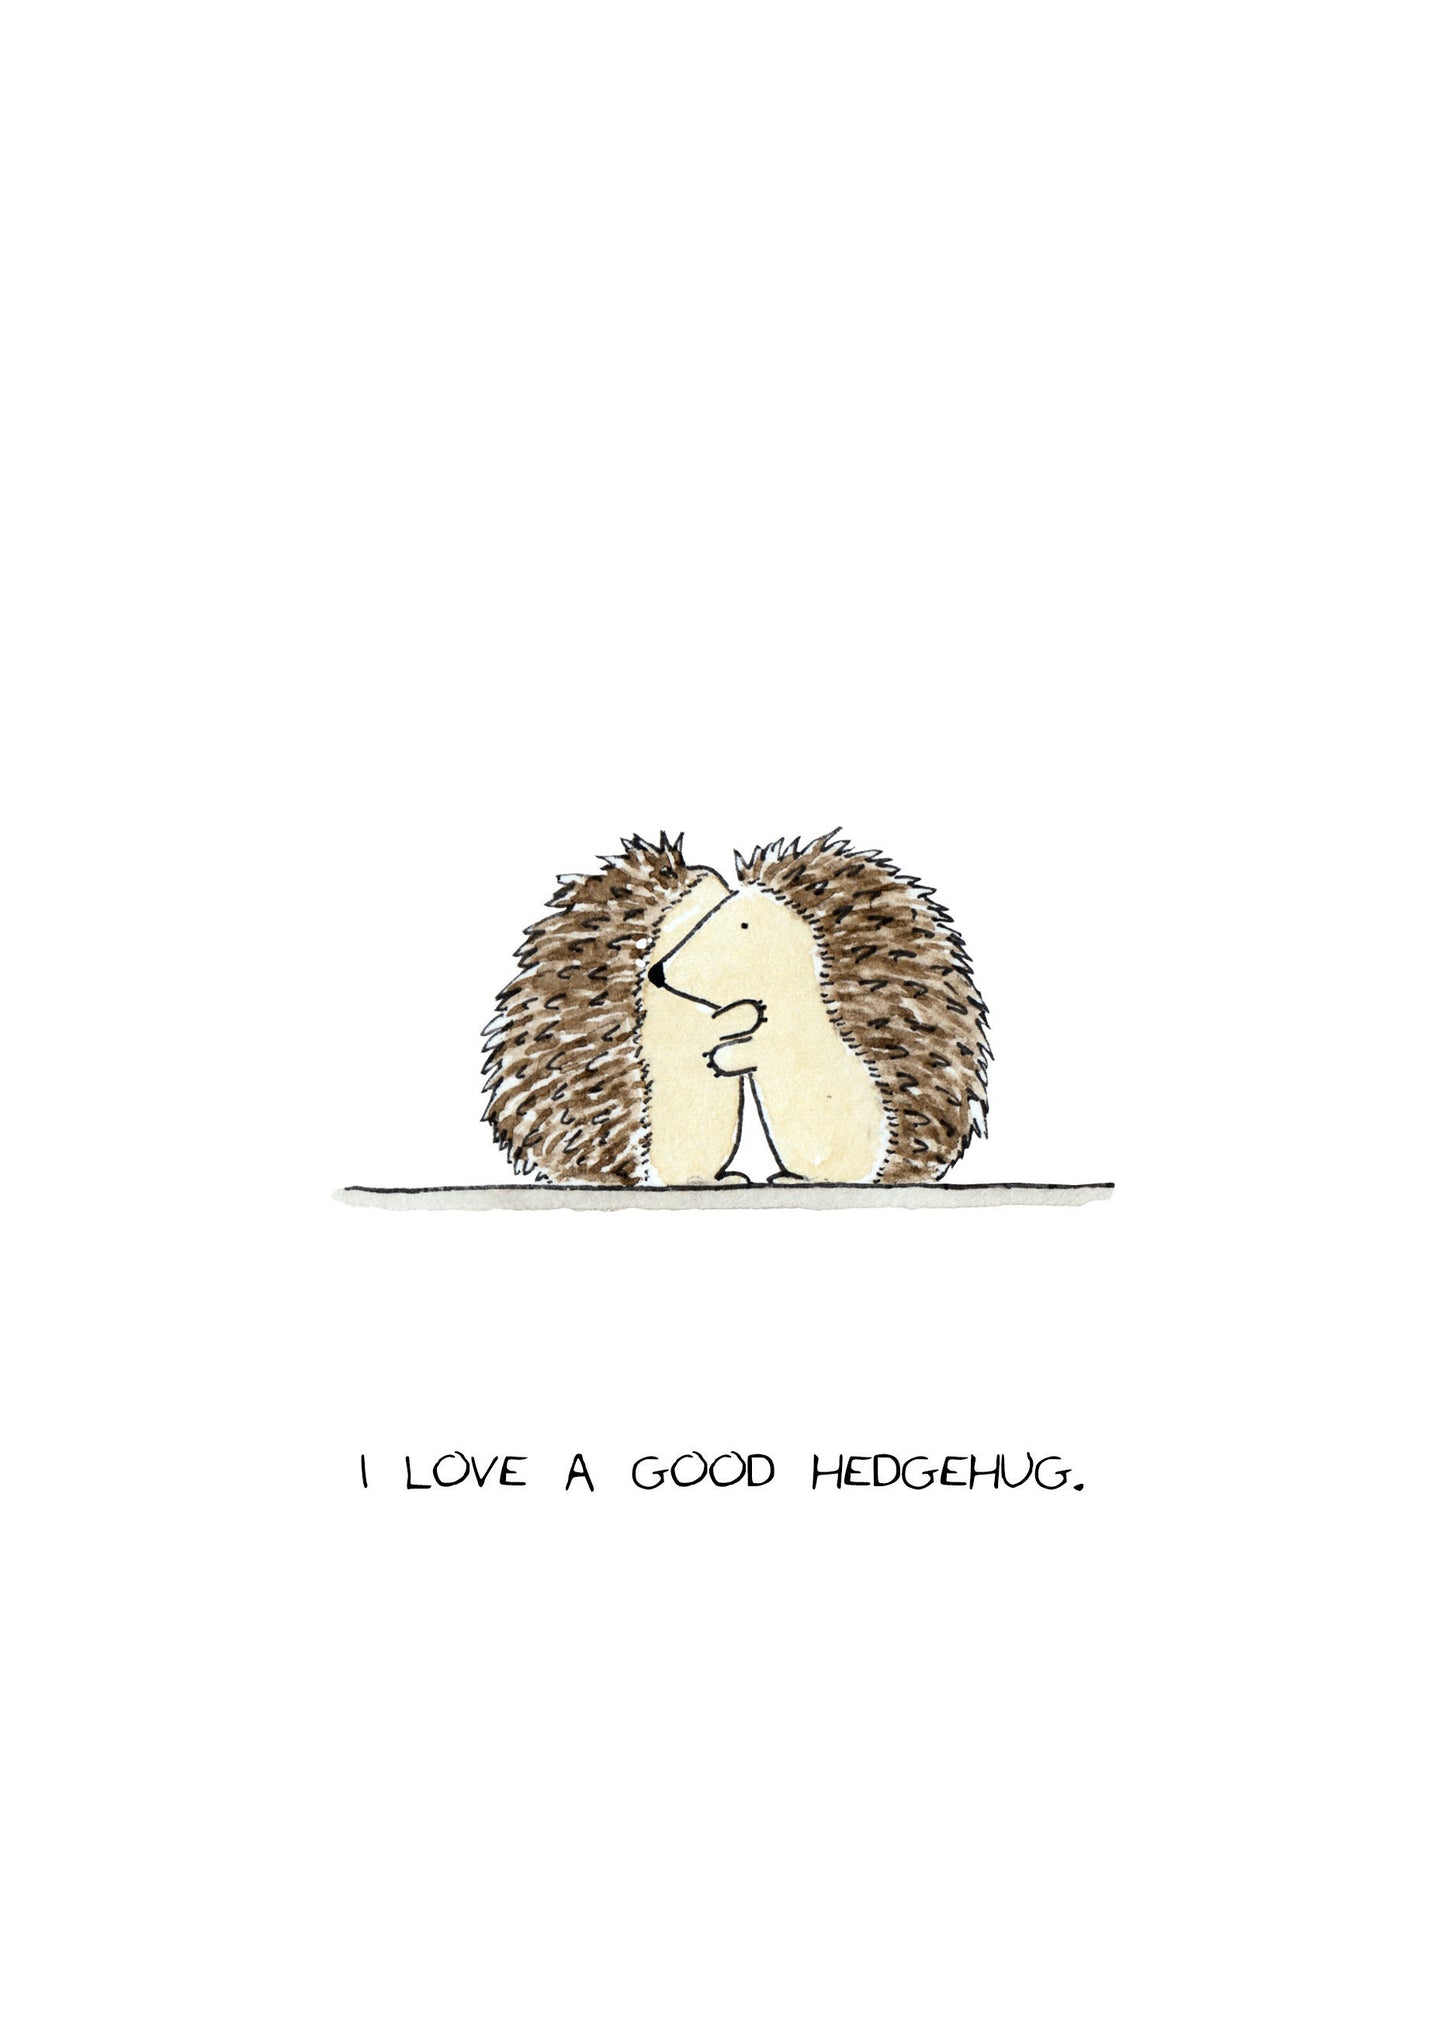 Hedgehog Hug